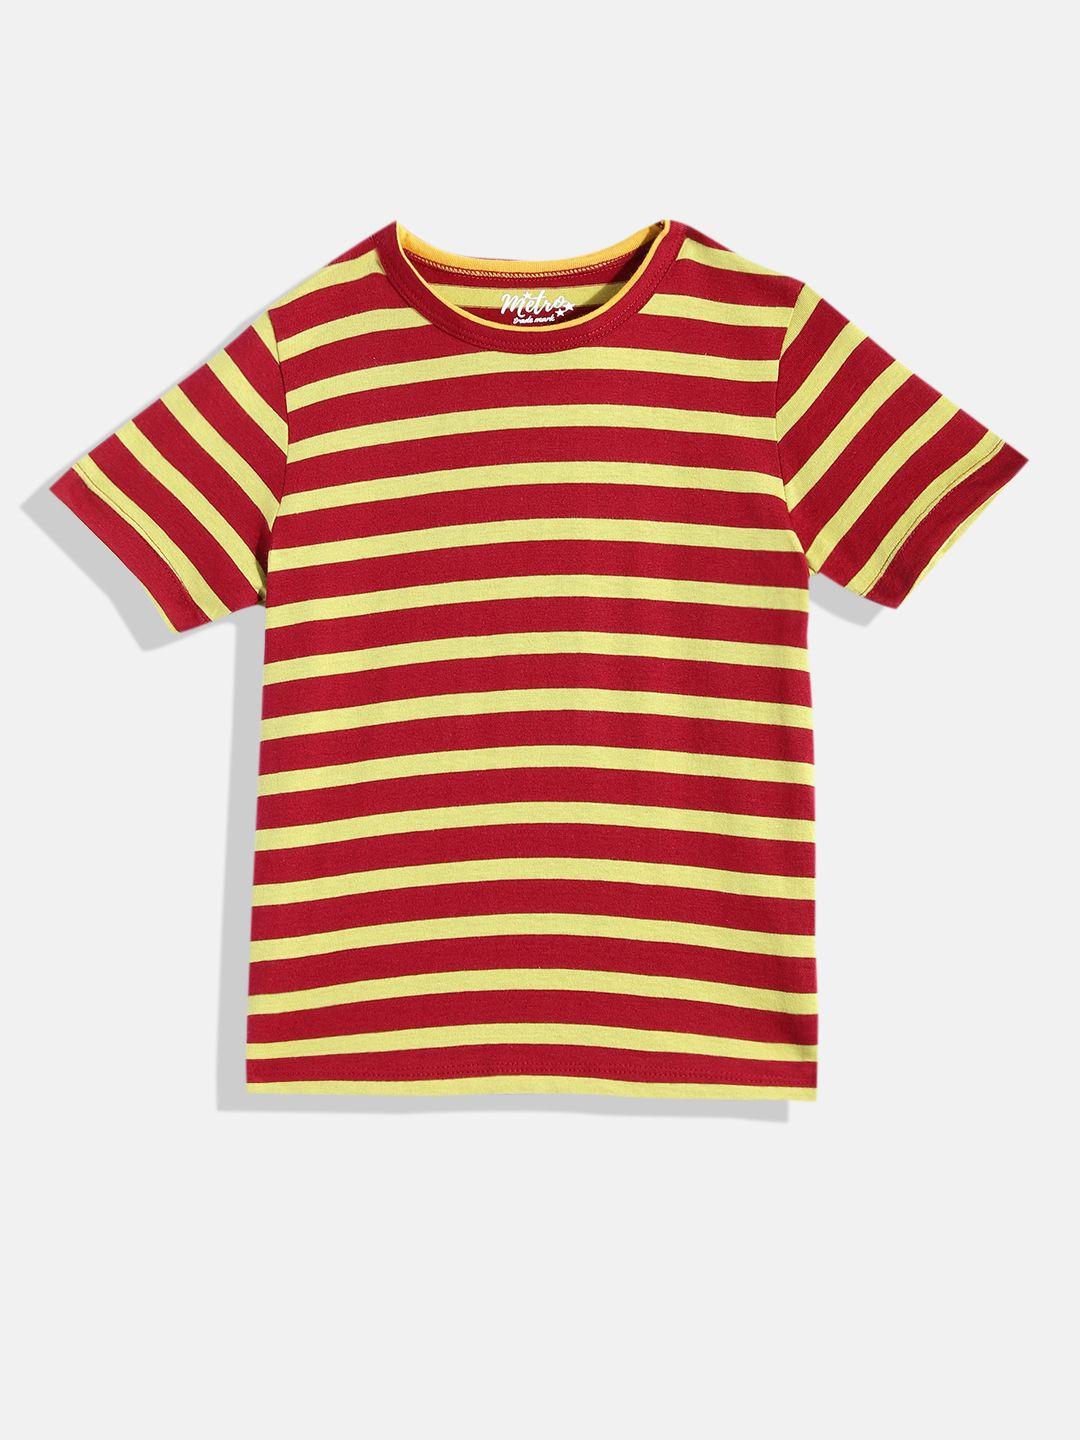 metro kids company boys red & yellow striped t-shirt